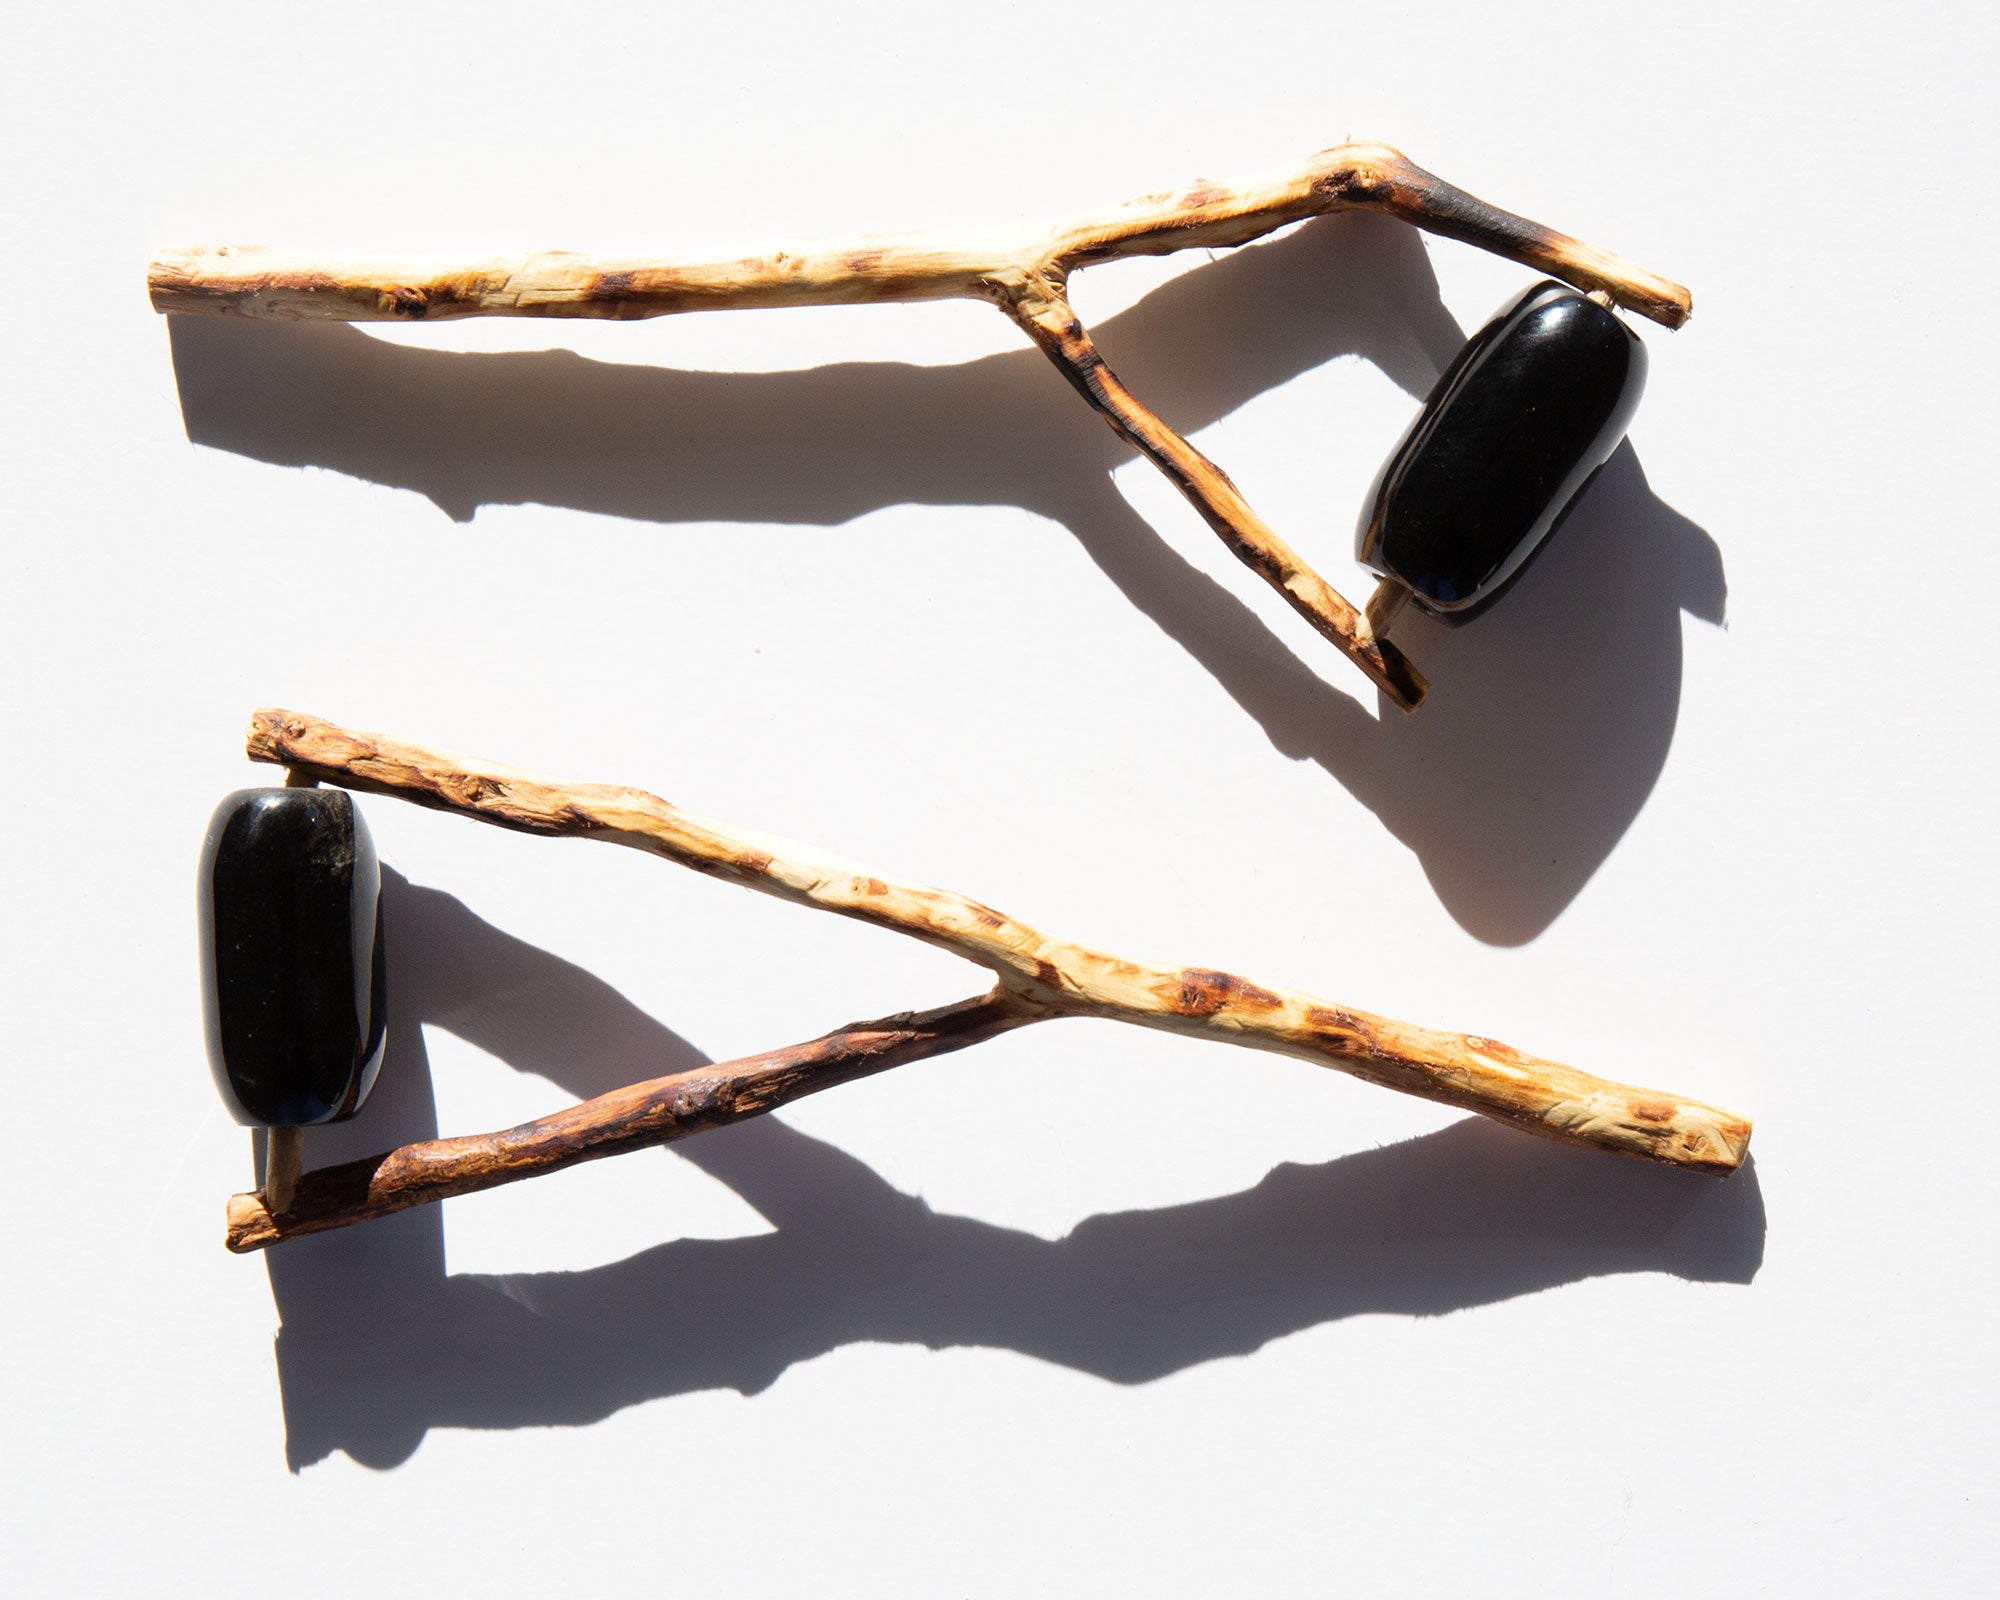 Huizache Wood and Obsidian Face Massage Tool